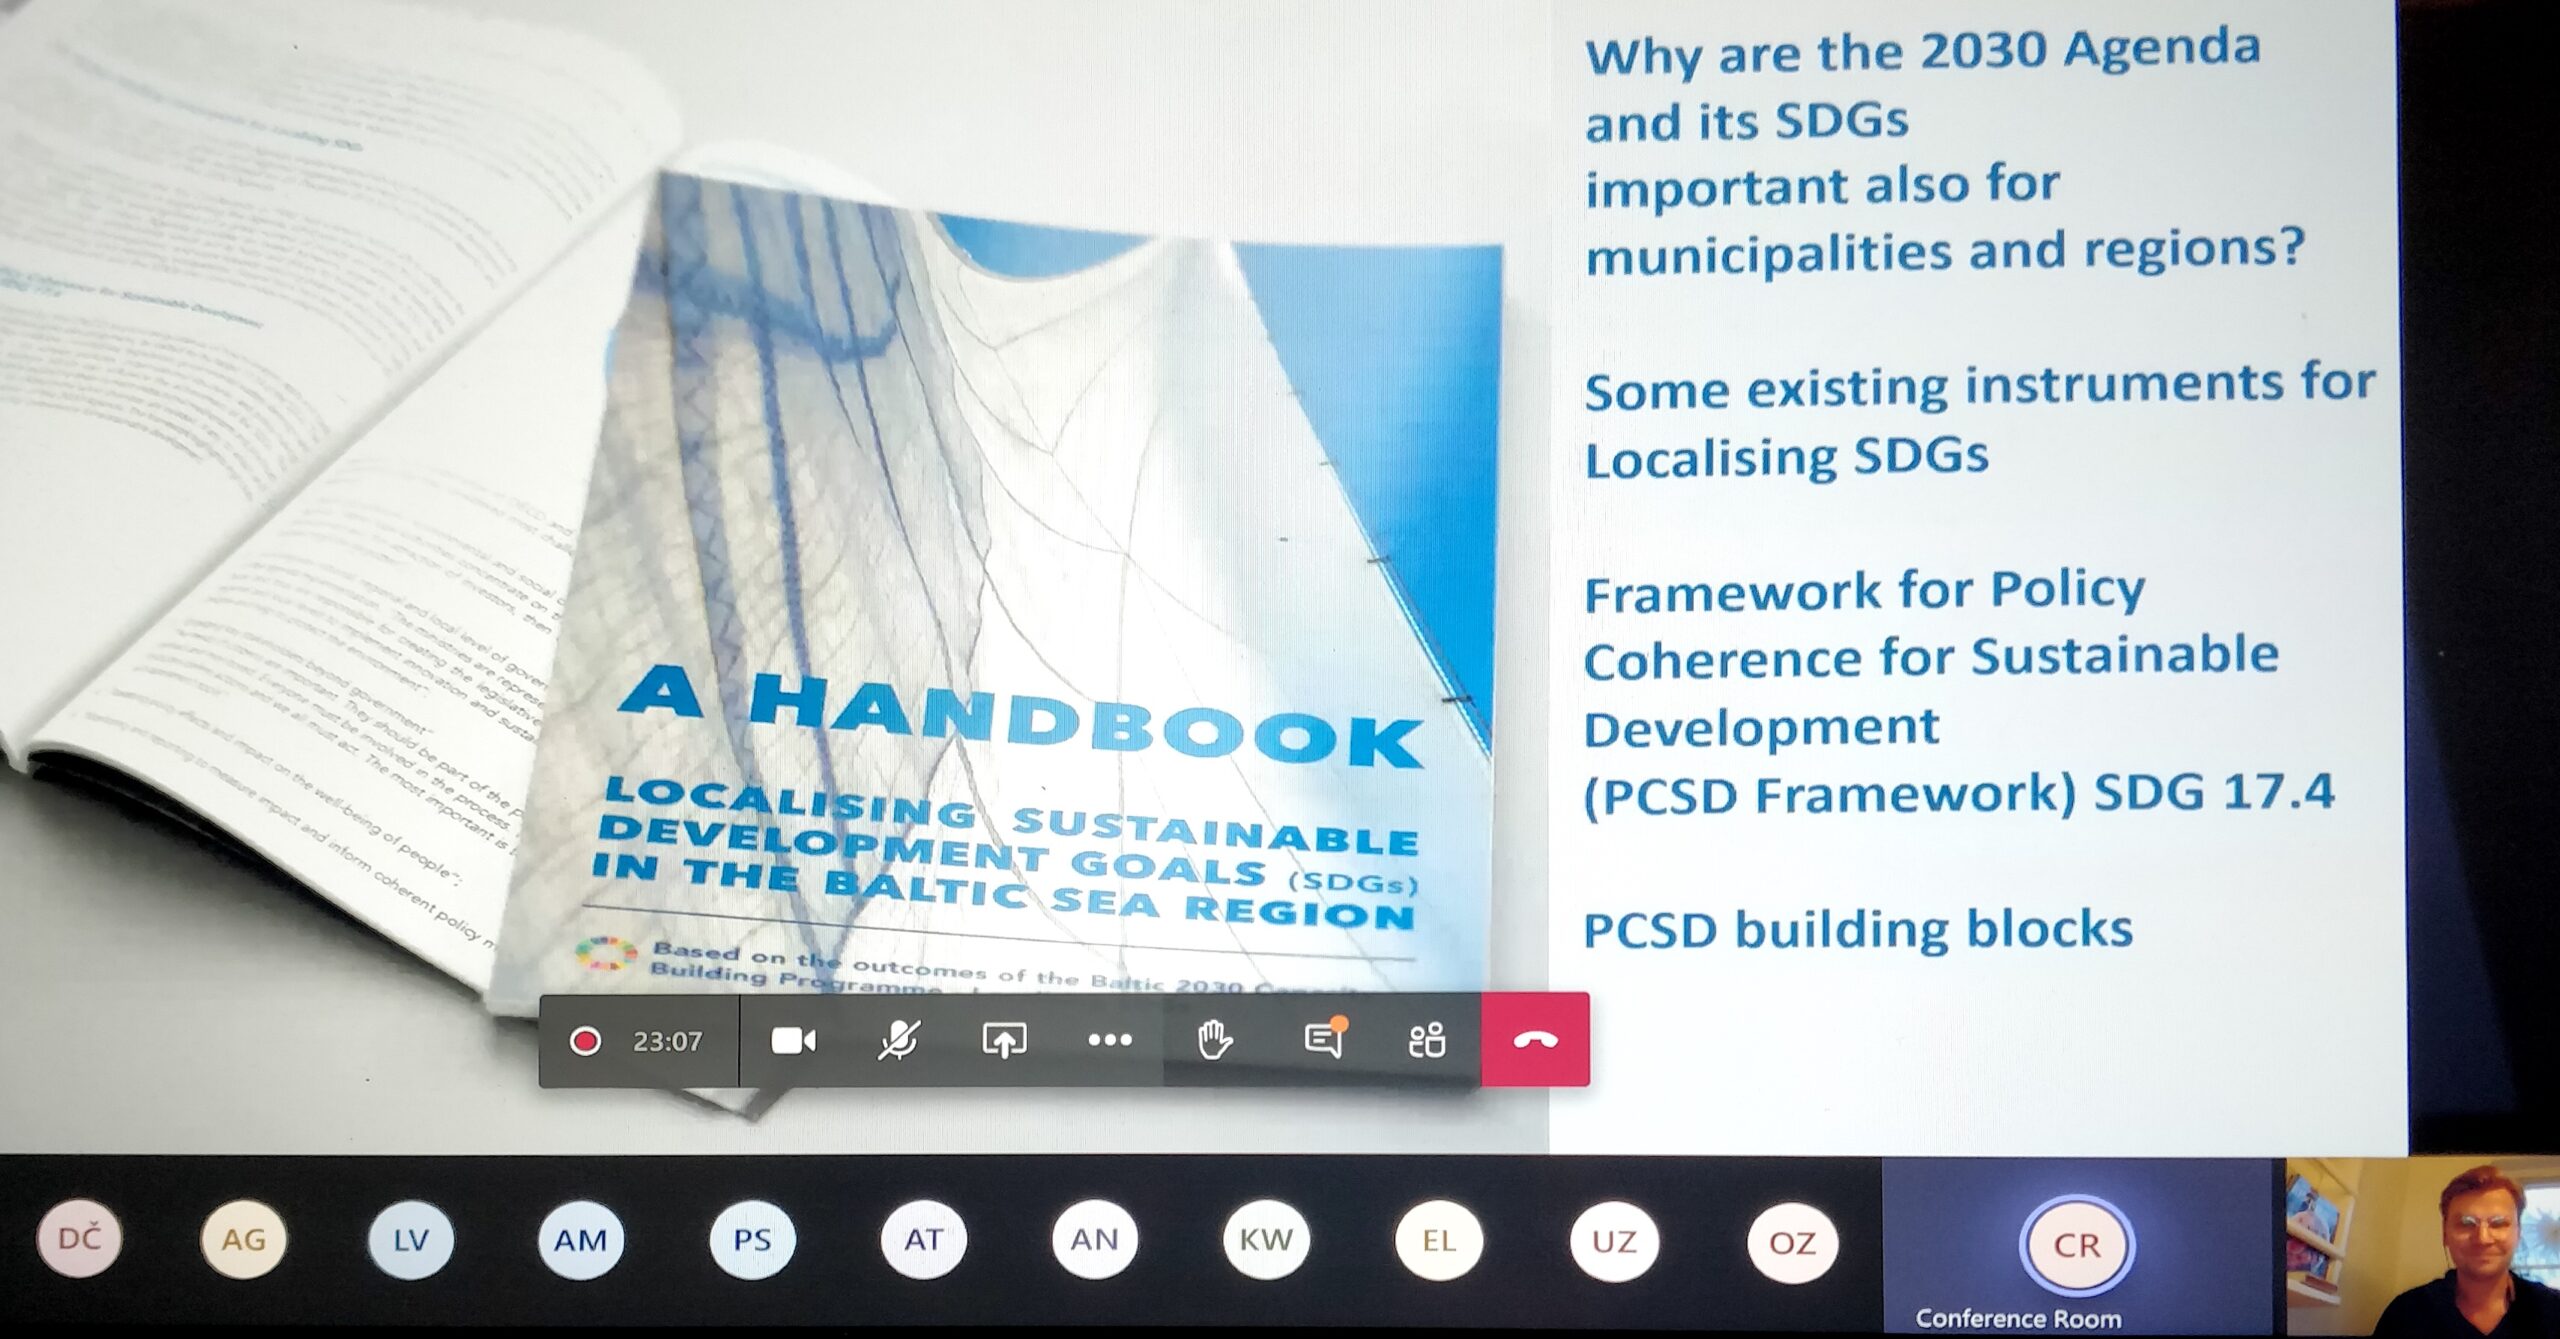 The launch of the Handbook “Localising SDG’s”